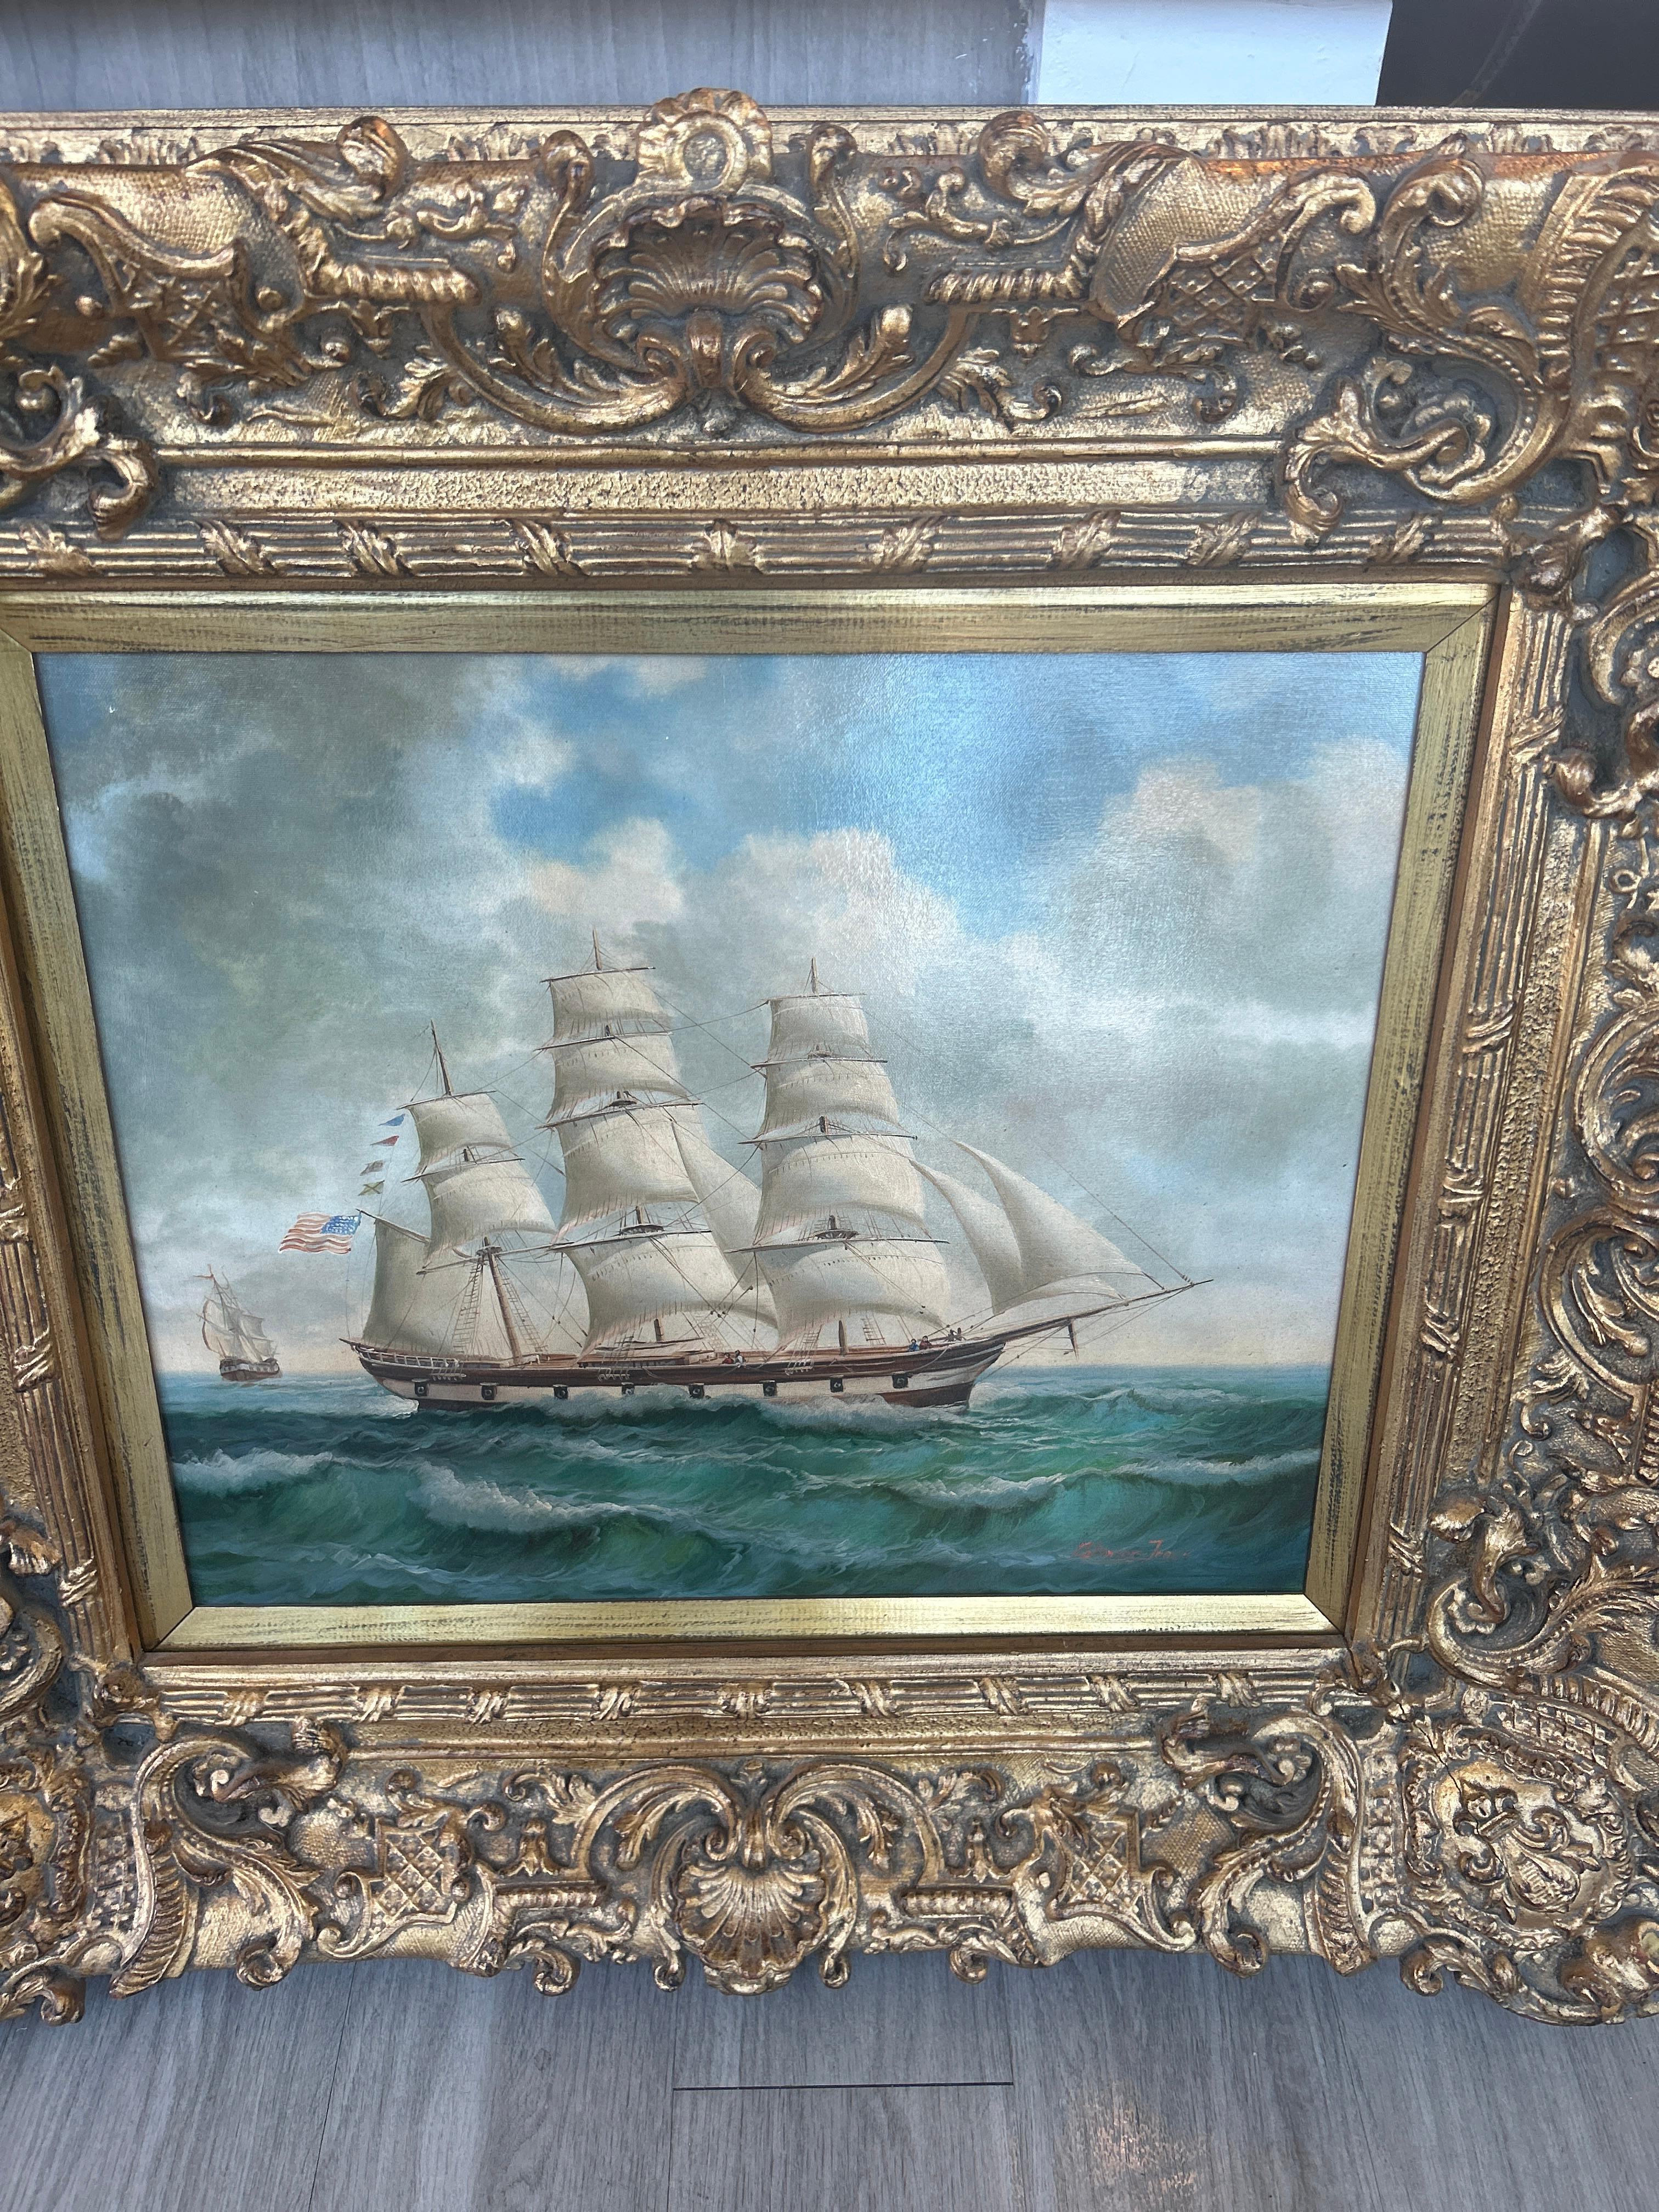 20th Century Robinson Jones Framed Oil Painting on Canvas of Sailing Vessel